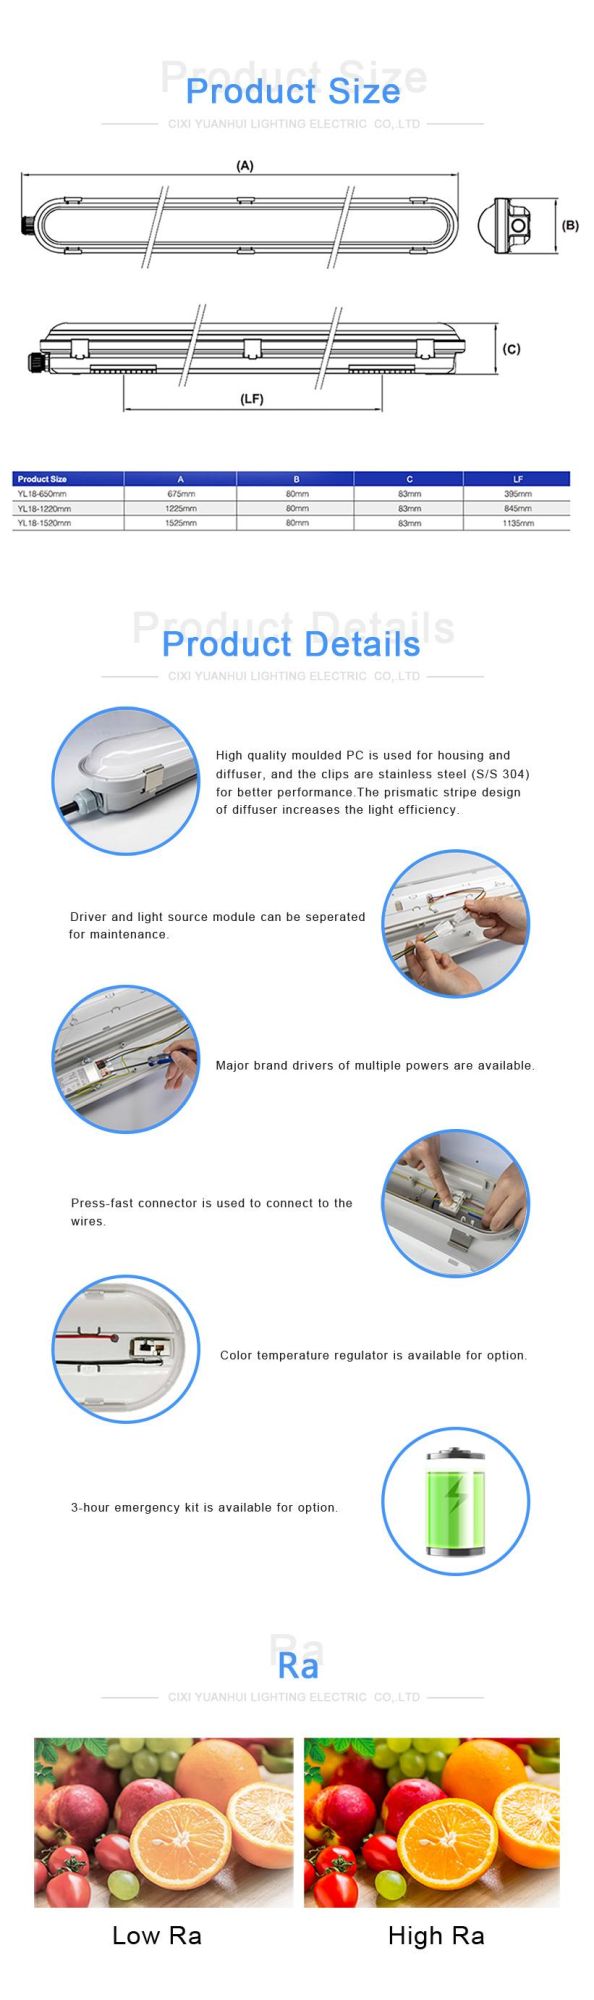 LED IP66 Waterproof Hot Selling 1.2m Linear Vapor Tight Lighting Tri-Proof Light Lamp